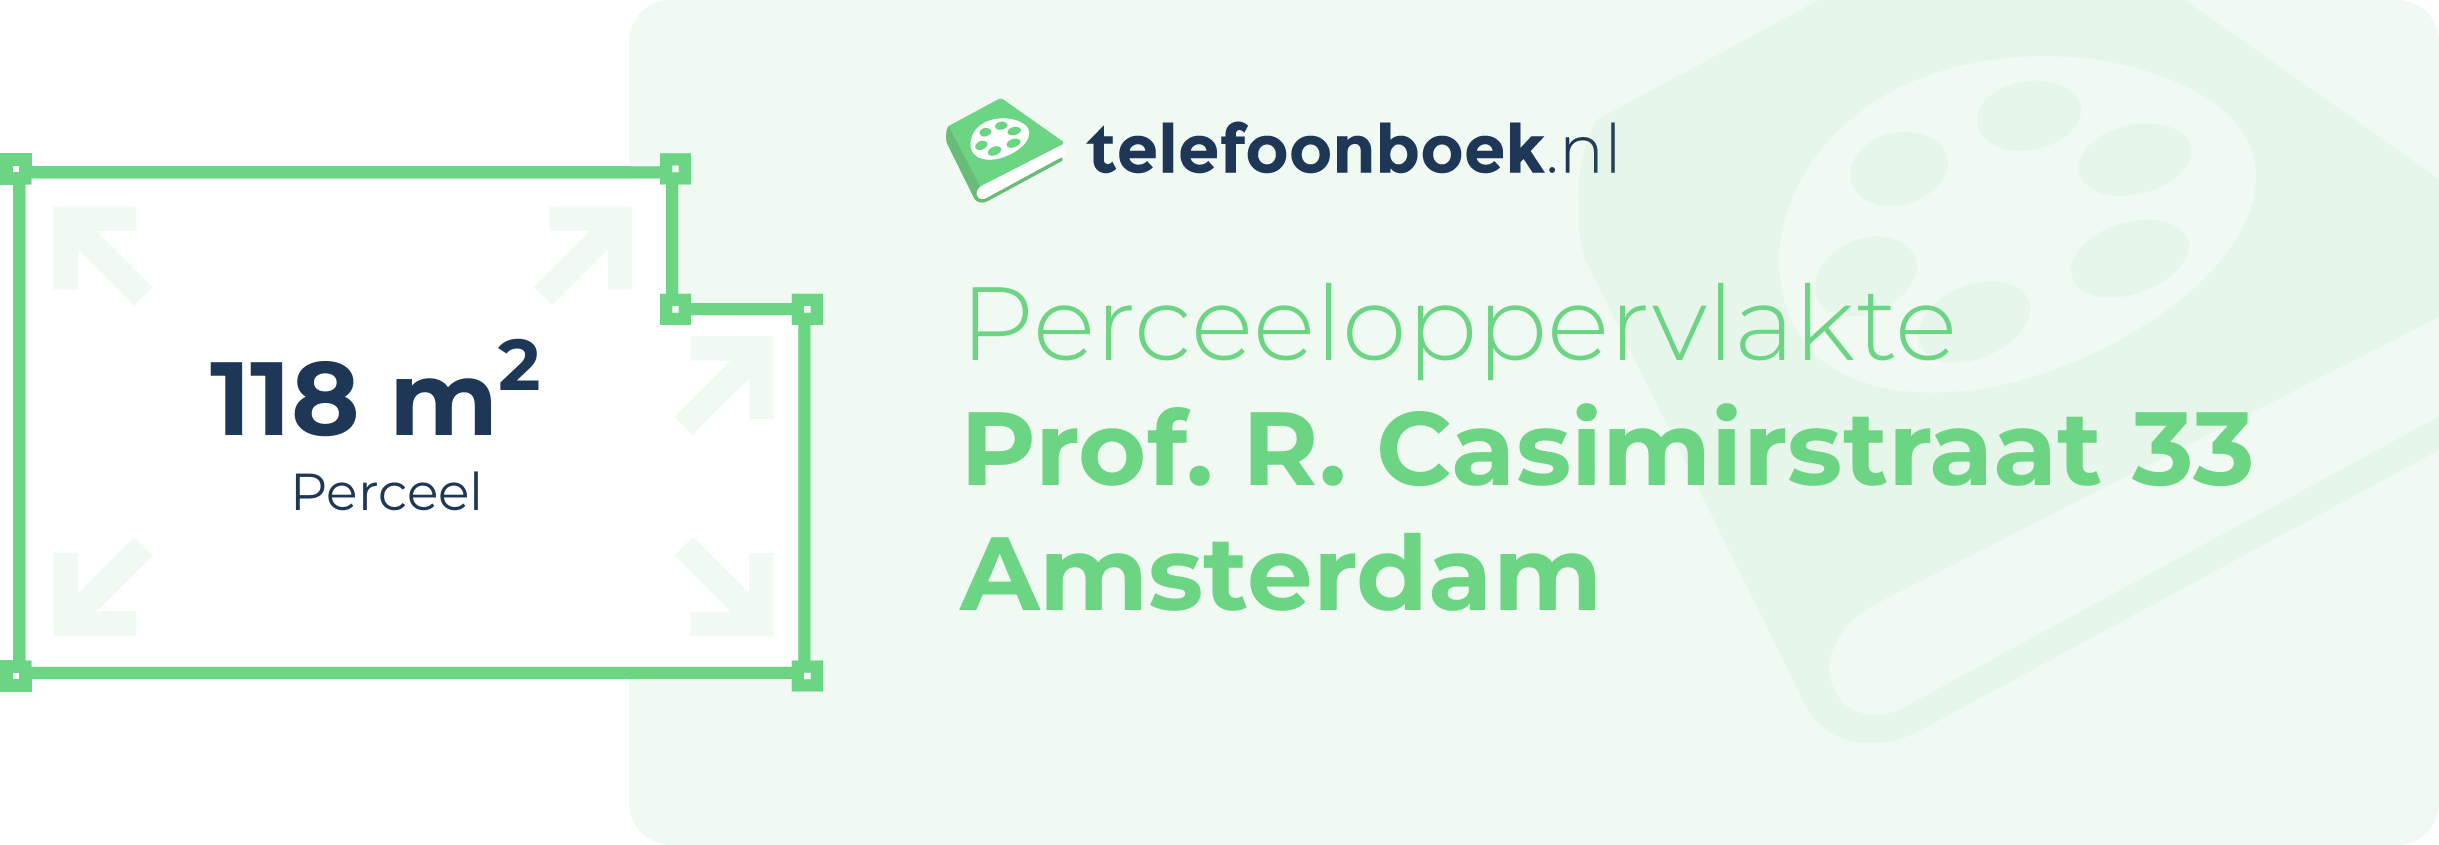 Perceeloppervlakte Prof. R. Casimirstraat 33 Amsterdam